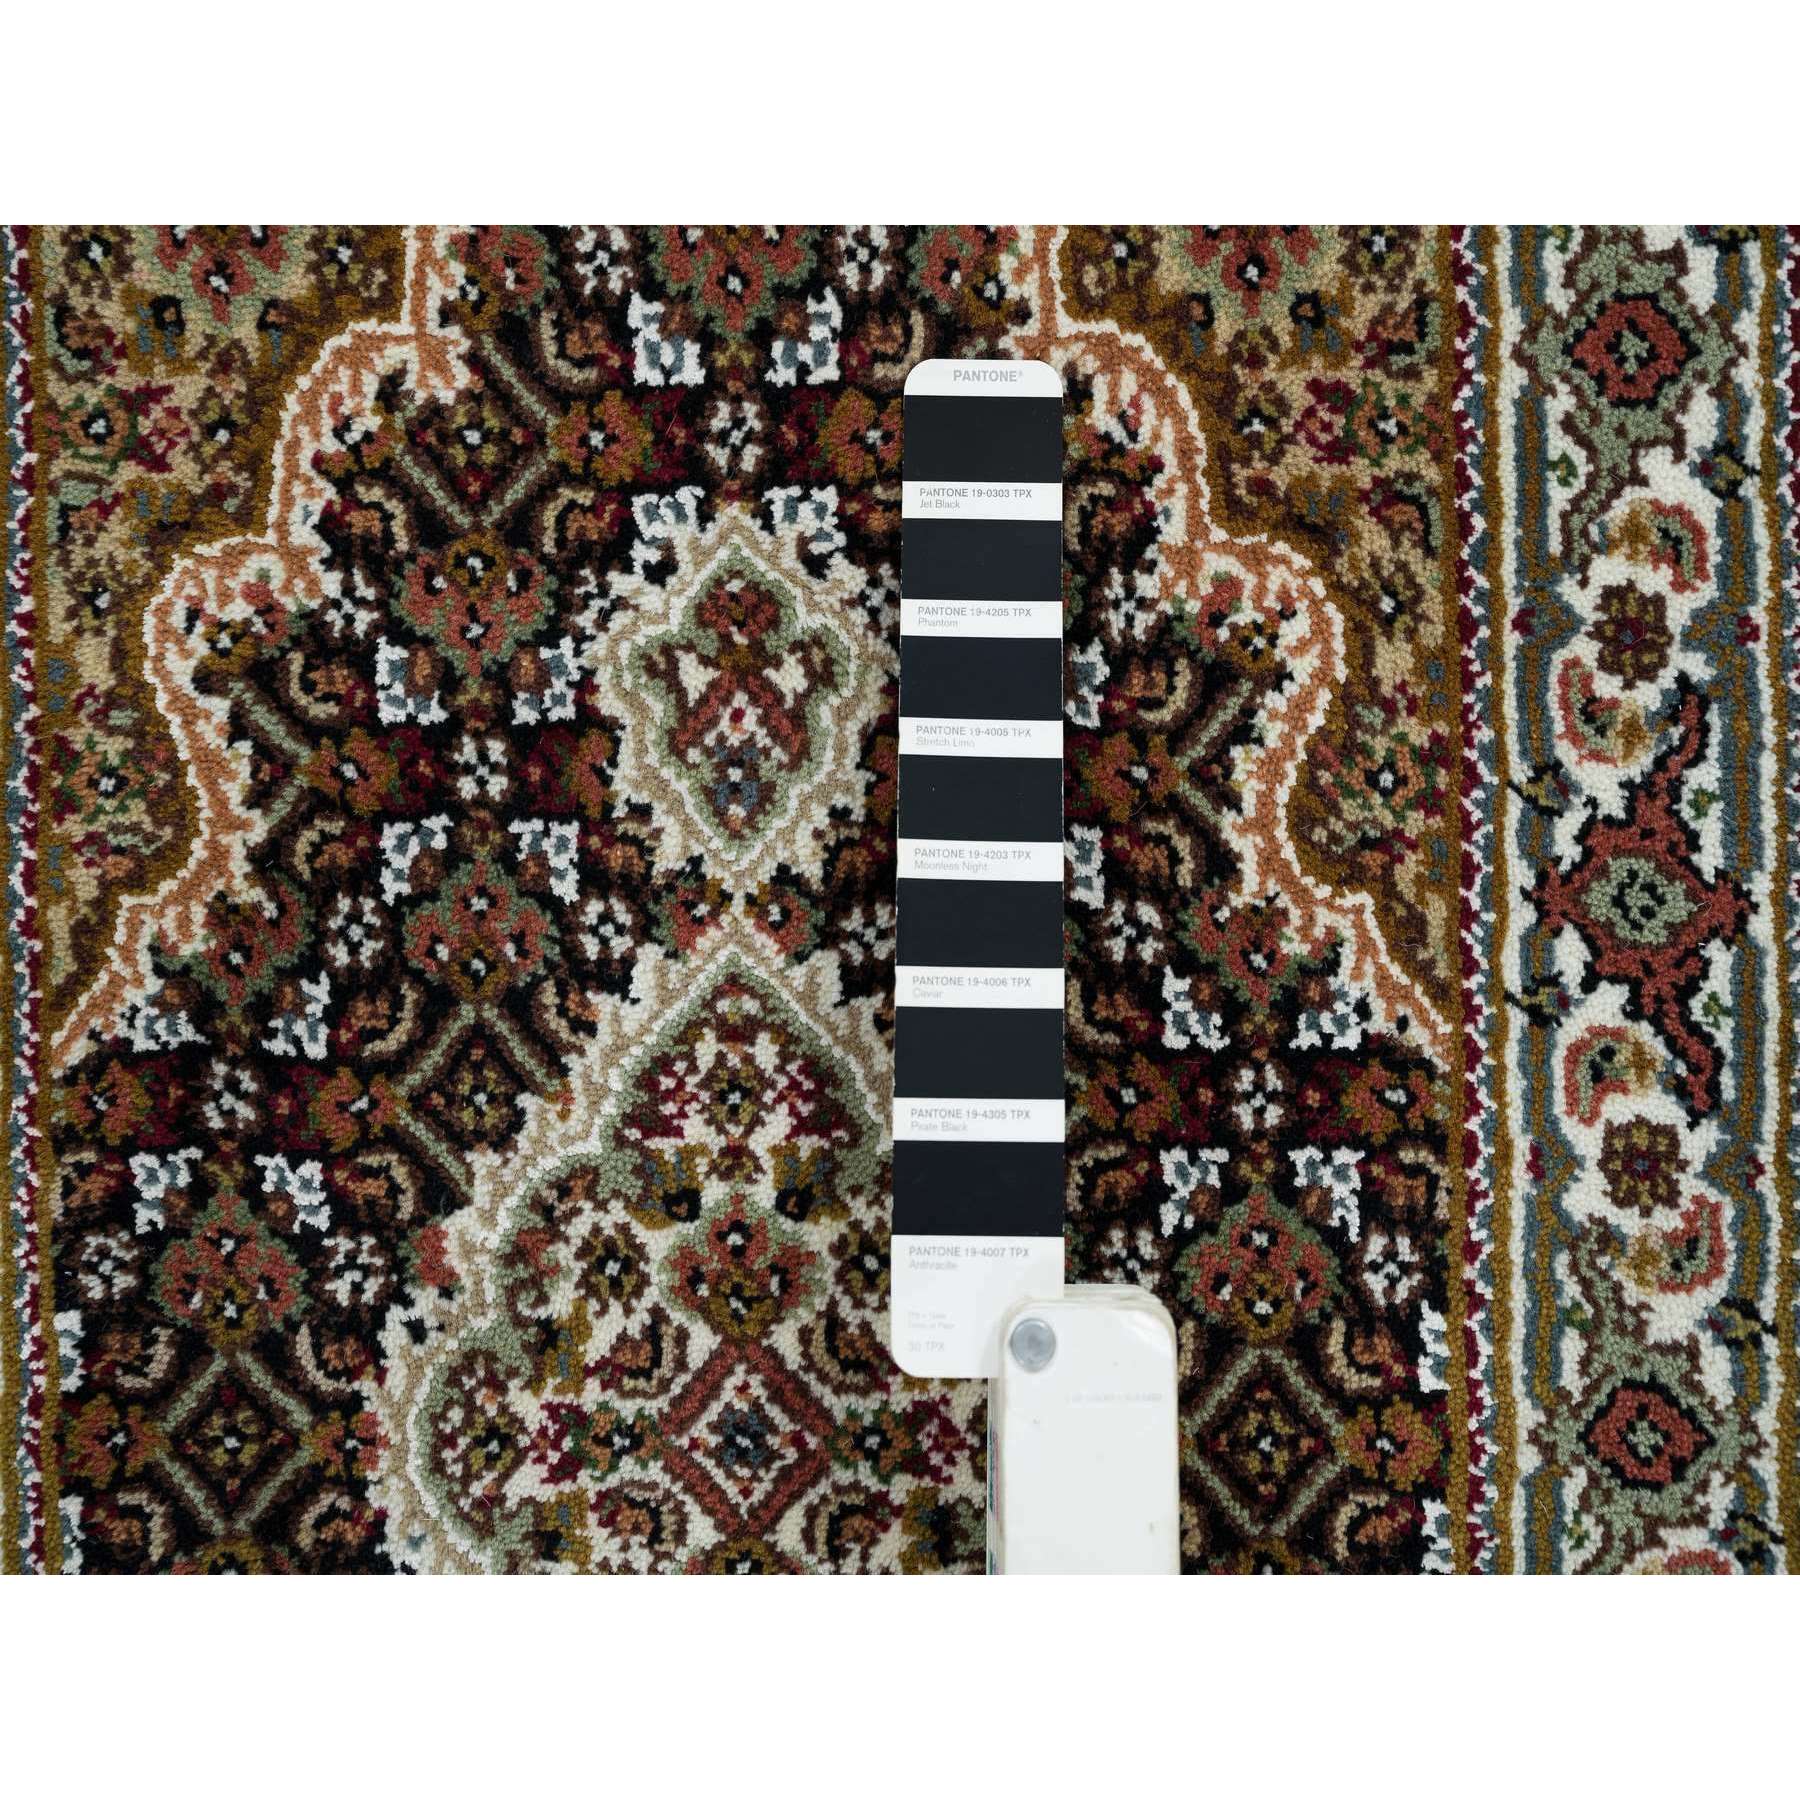 2'x3'1" Rich Black, Tabriz Mahi with Fish Medallion Design, Hand Woven, 175 KPSI, 100% Wool, Mat Oriental Rug 